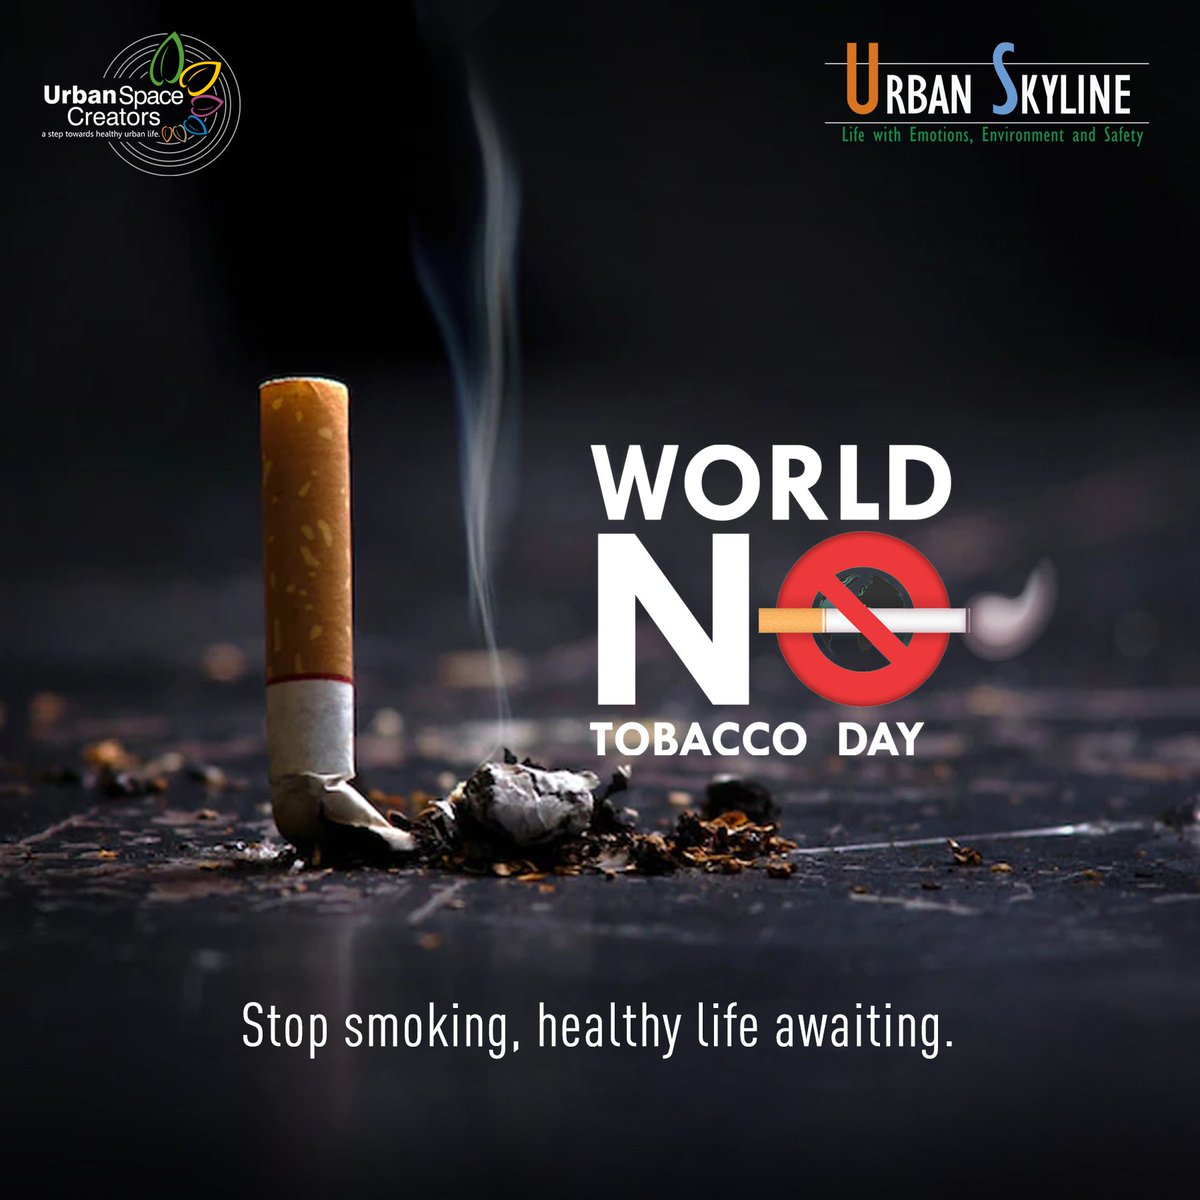 Say no to smoking and tobacco to live a healthier 🏋️ and happier life.
World No 🚭 Tobacco Day!

#UrbanSkyline #UrbanSpaceCreators #tobacco #tobaccofree #notobacco #worldnotobaccoday #nosmoking #quitsmoking #stopsmoking #worldnotabaccoday2022